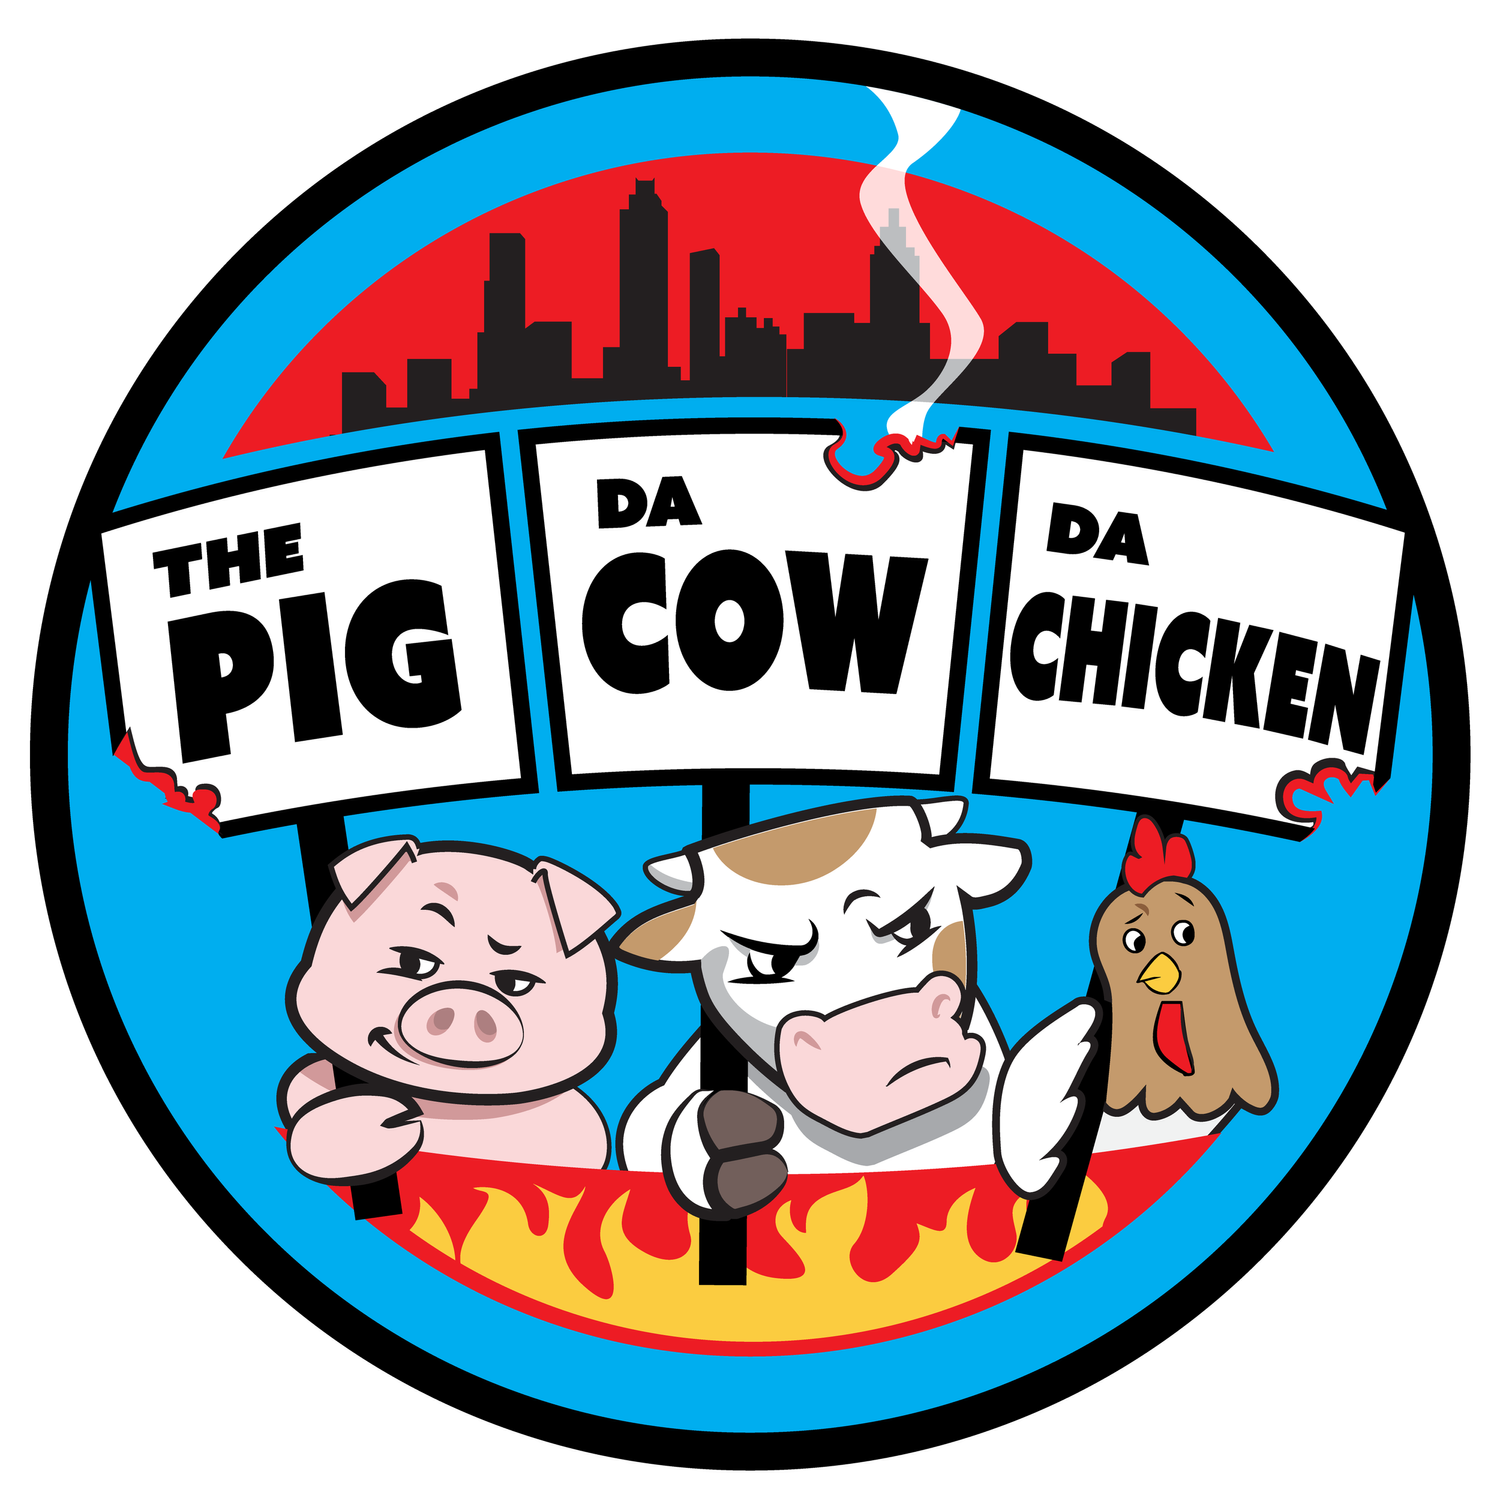 The Pig Da Cow and Da Chicken